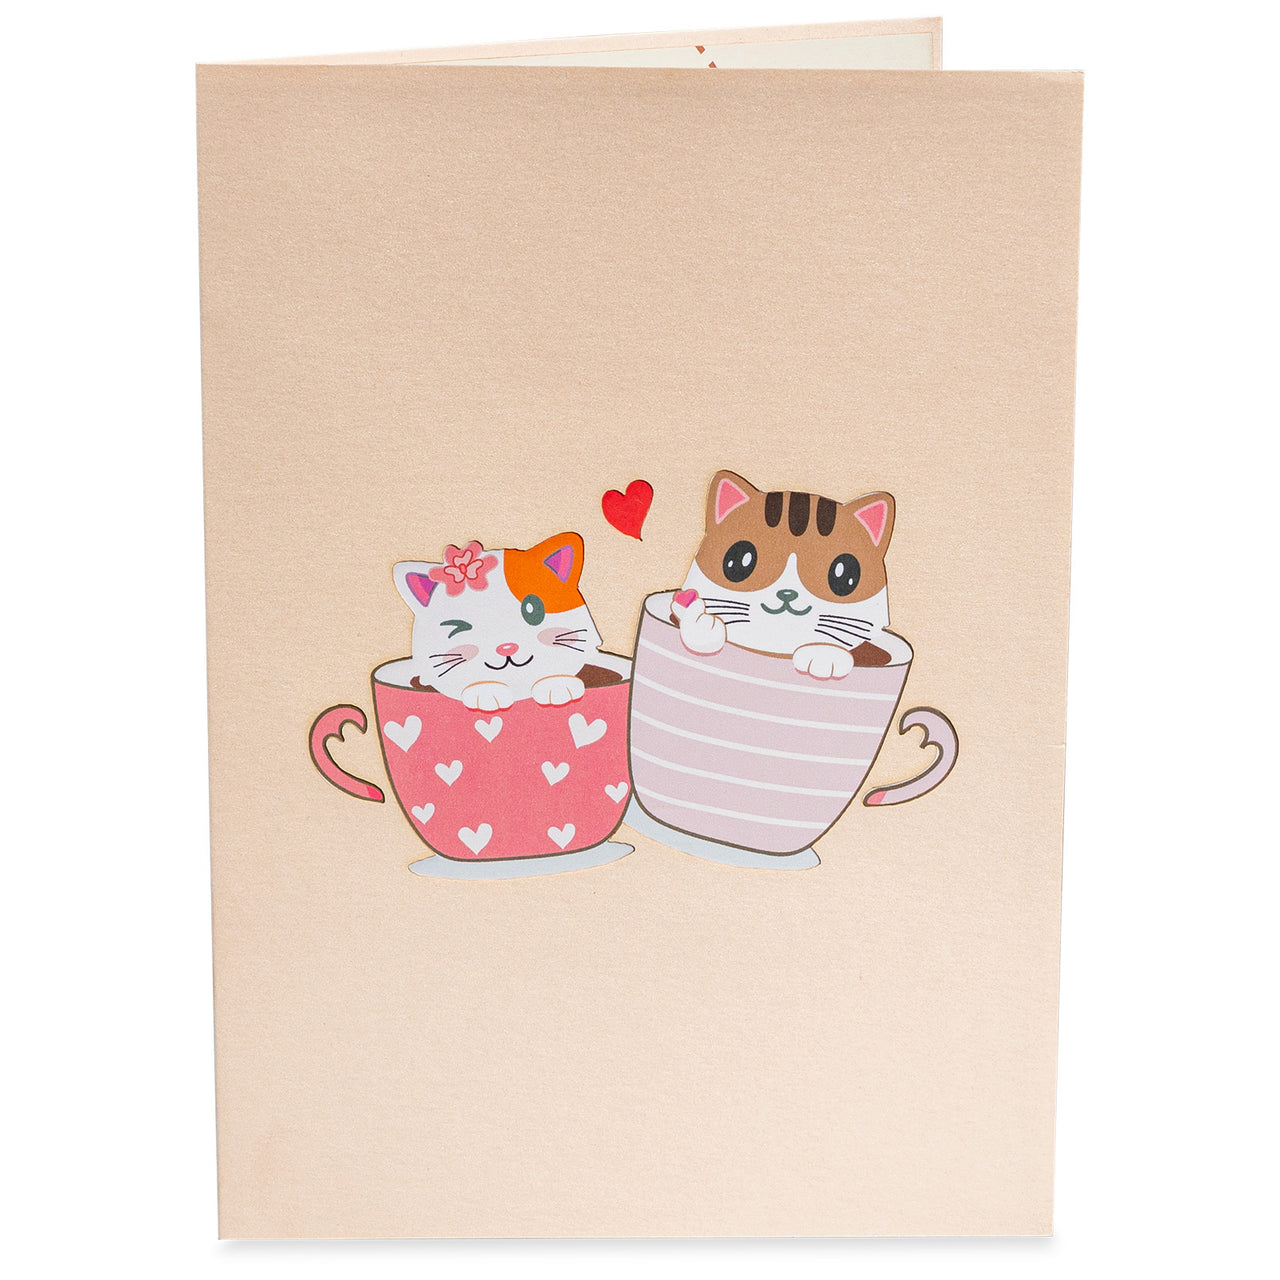 Love Cat Mugs Pop Up Card- 5"x7"